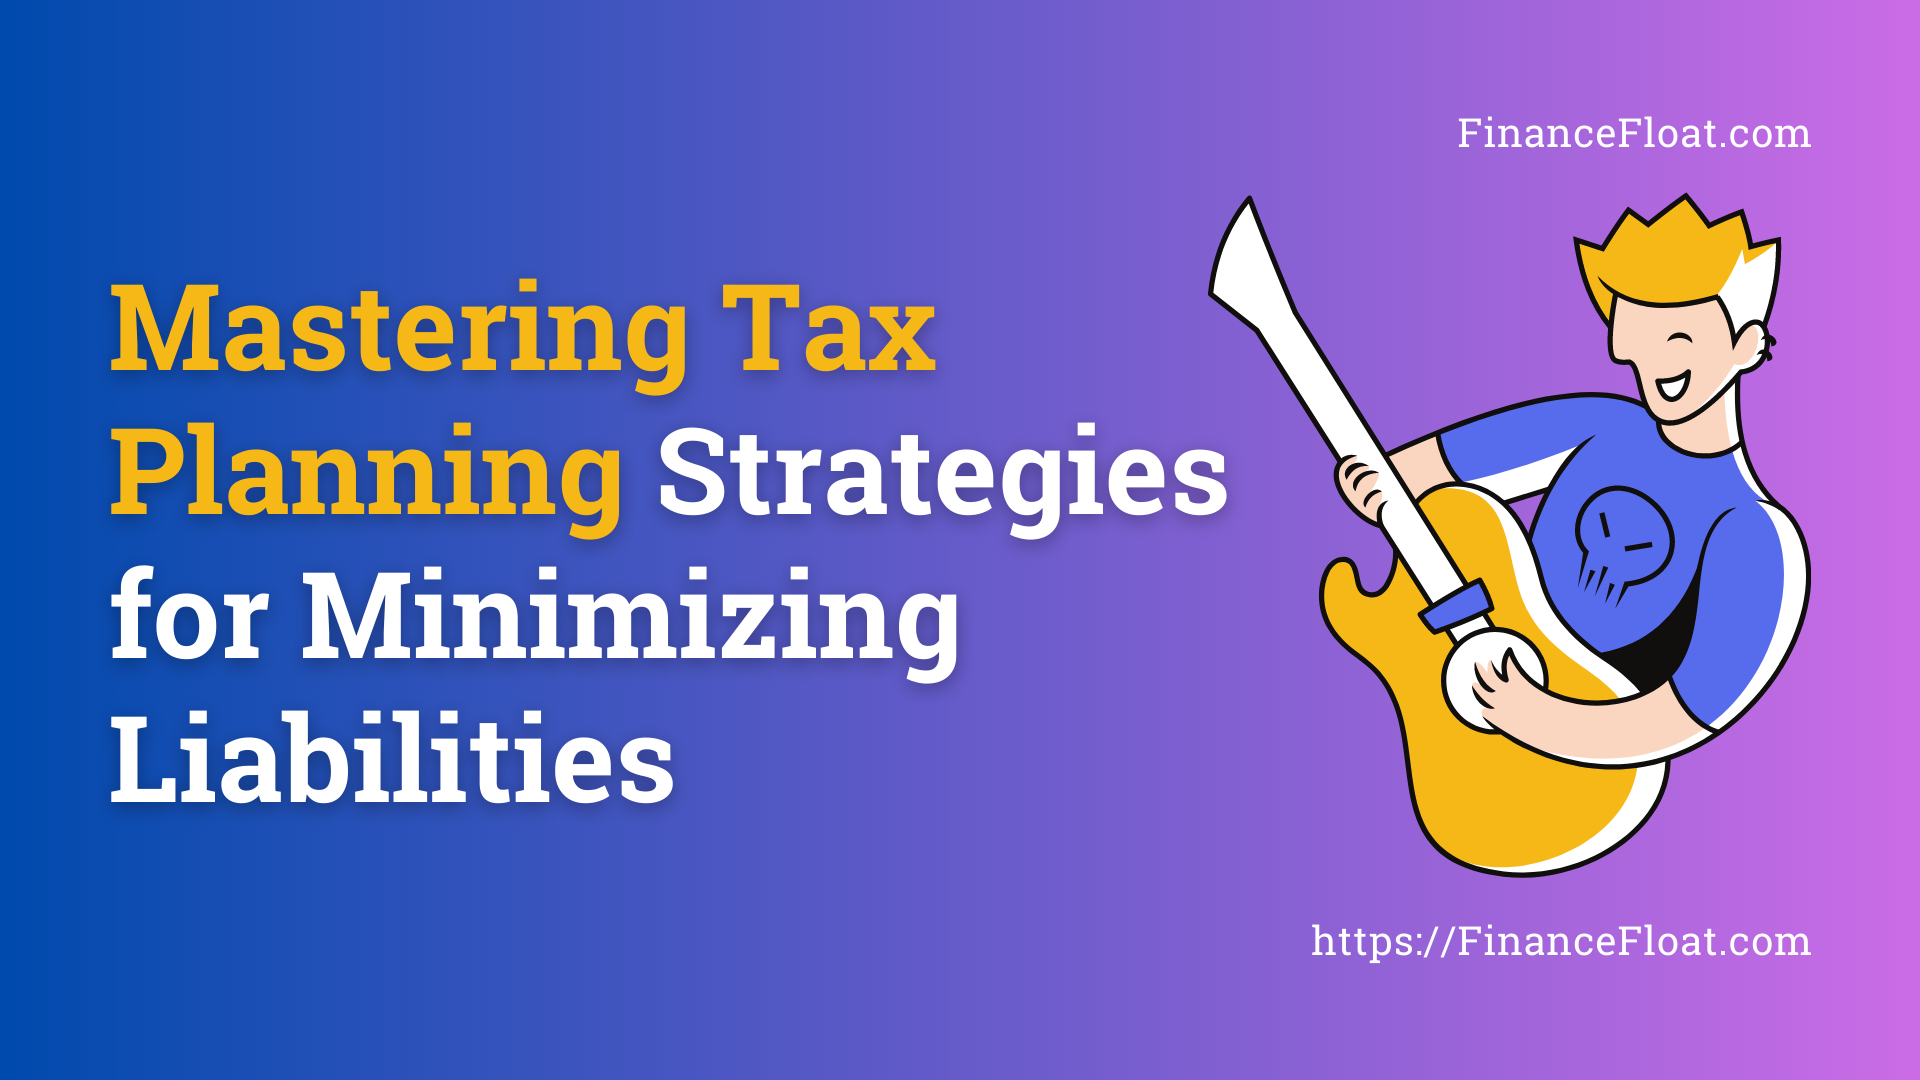 Mastering Tax Planning Strategies for Minimizing Liabilities